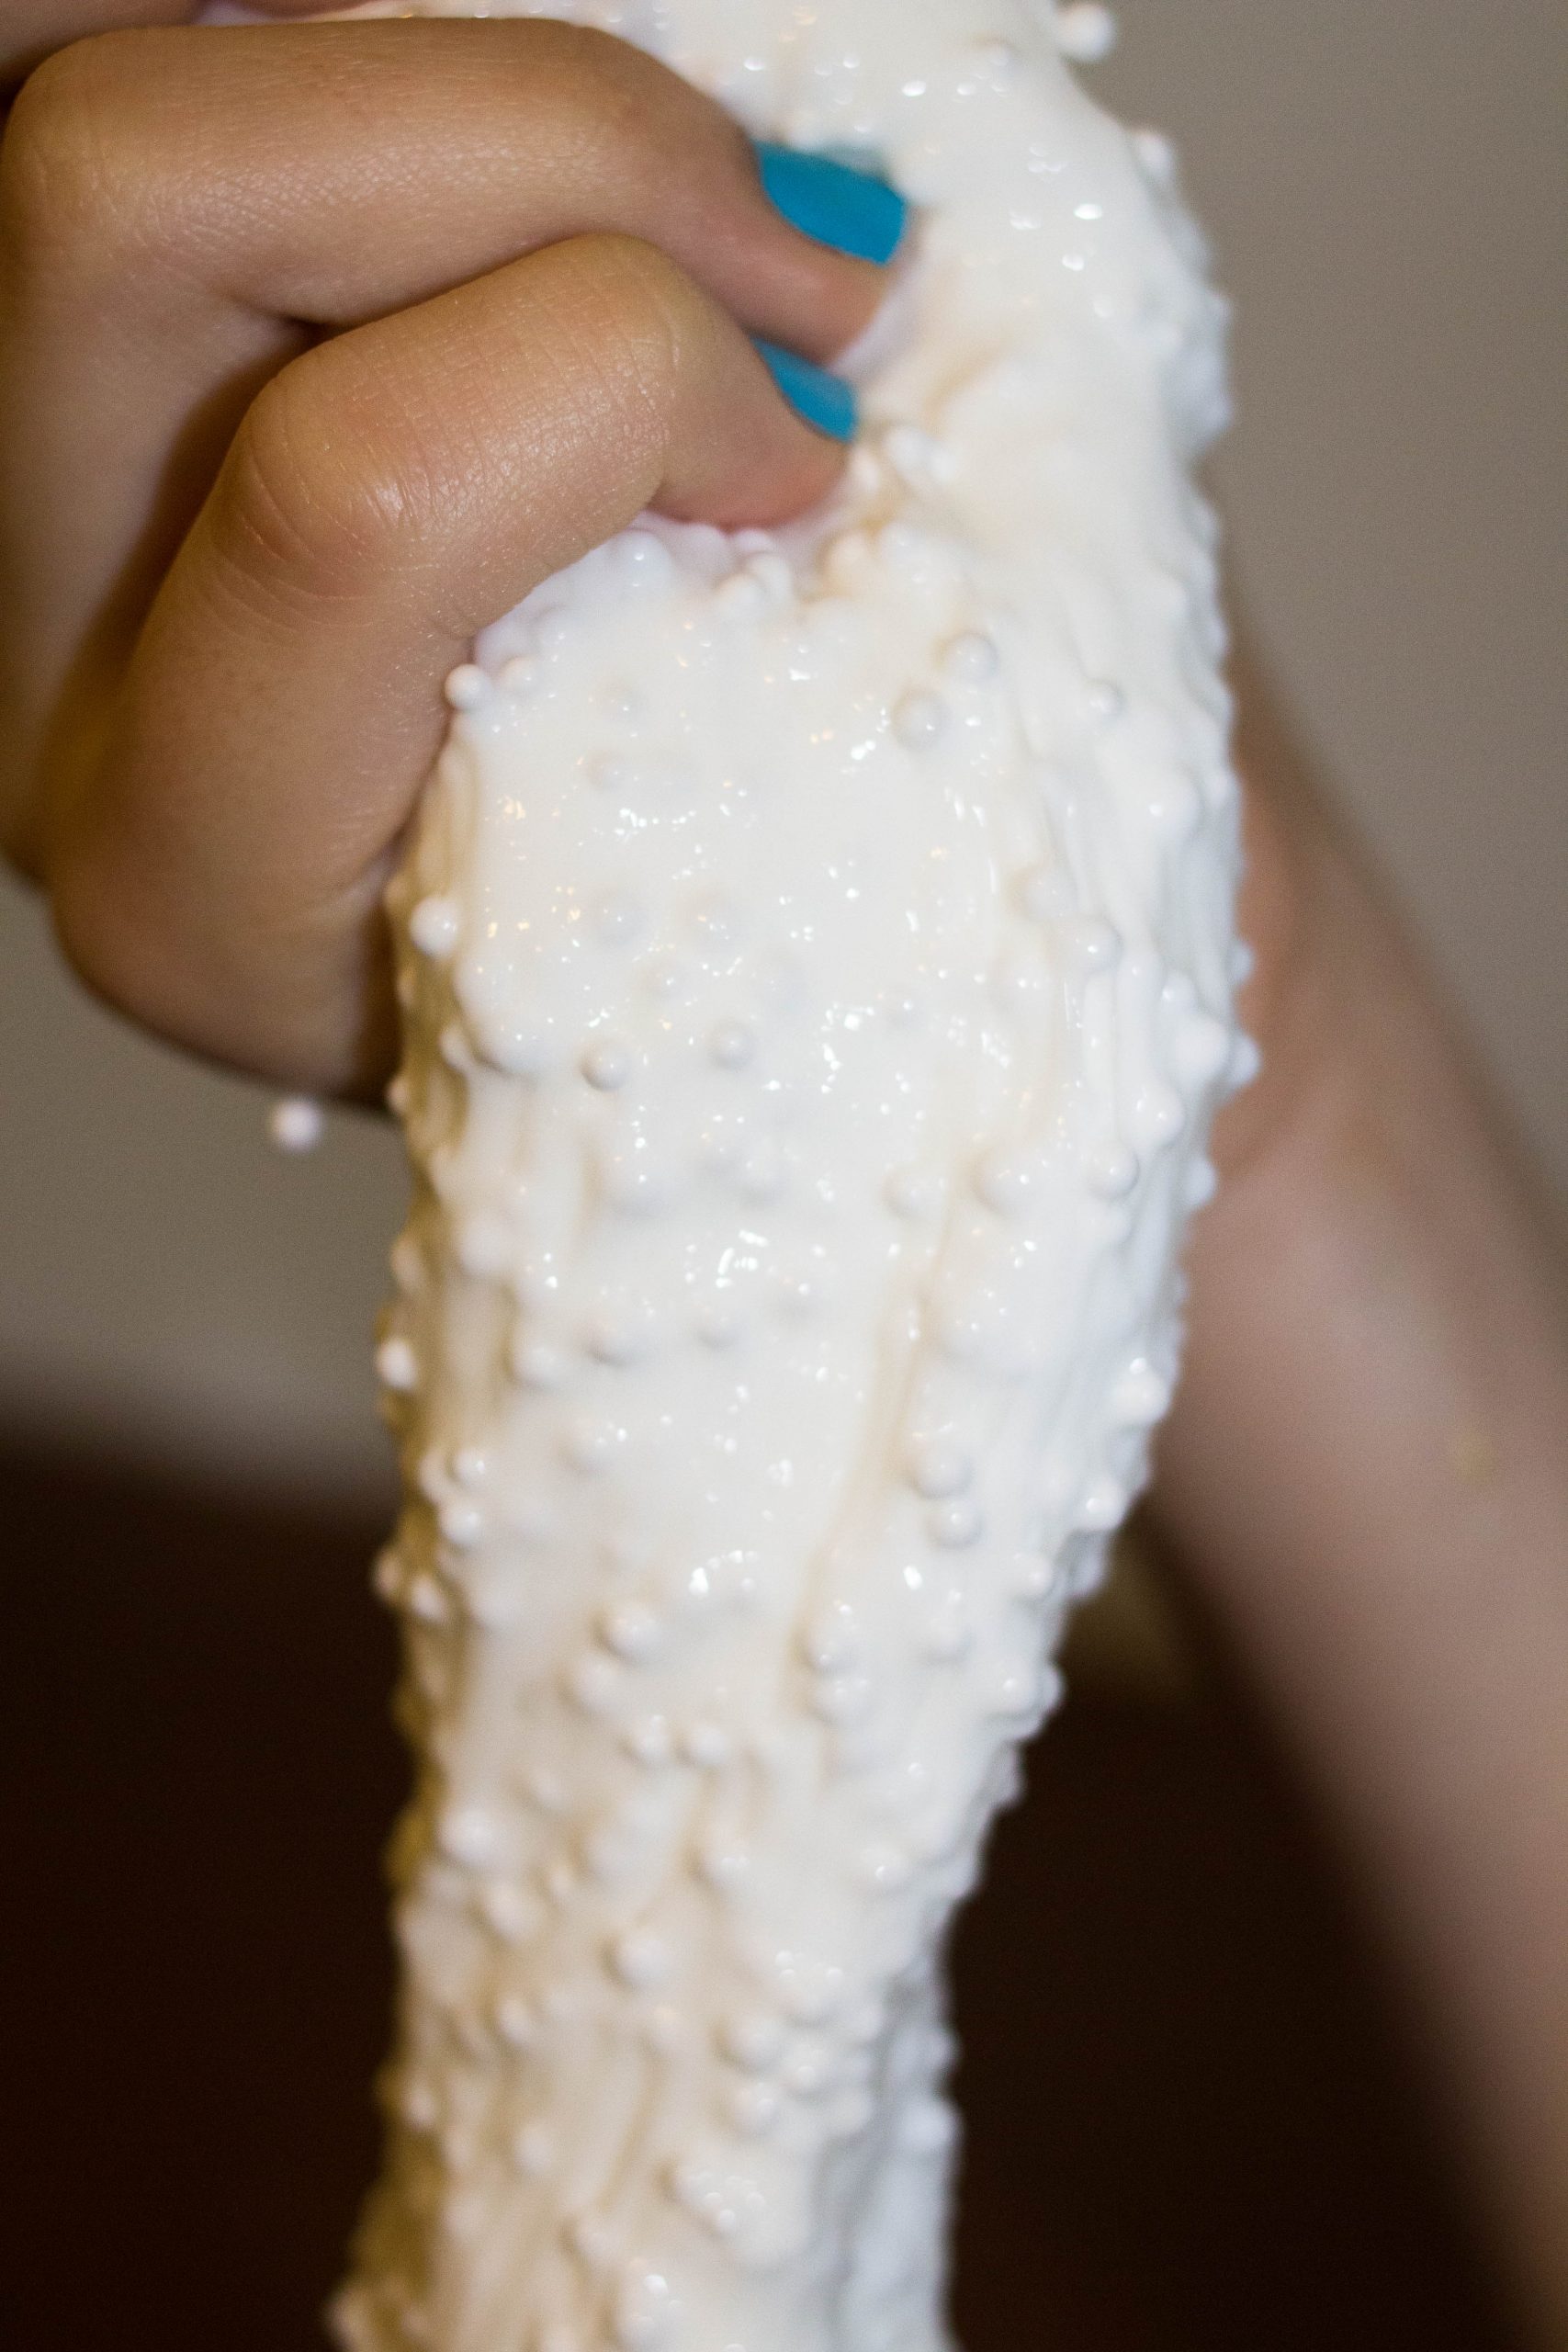 Crunchy Slime : Borax free slime that feels like Bubble Wrap